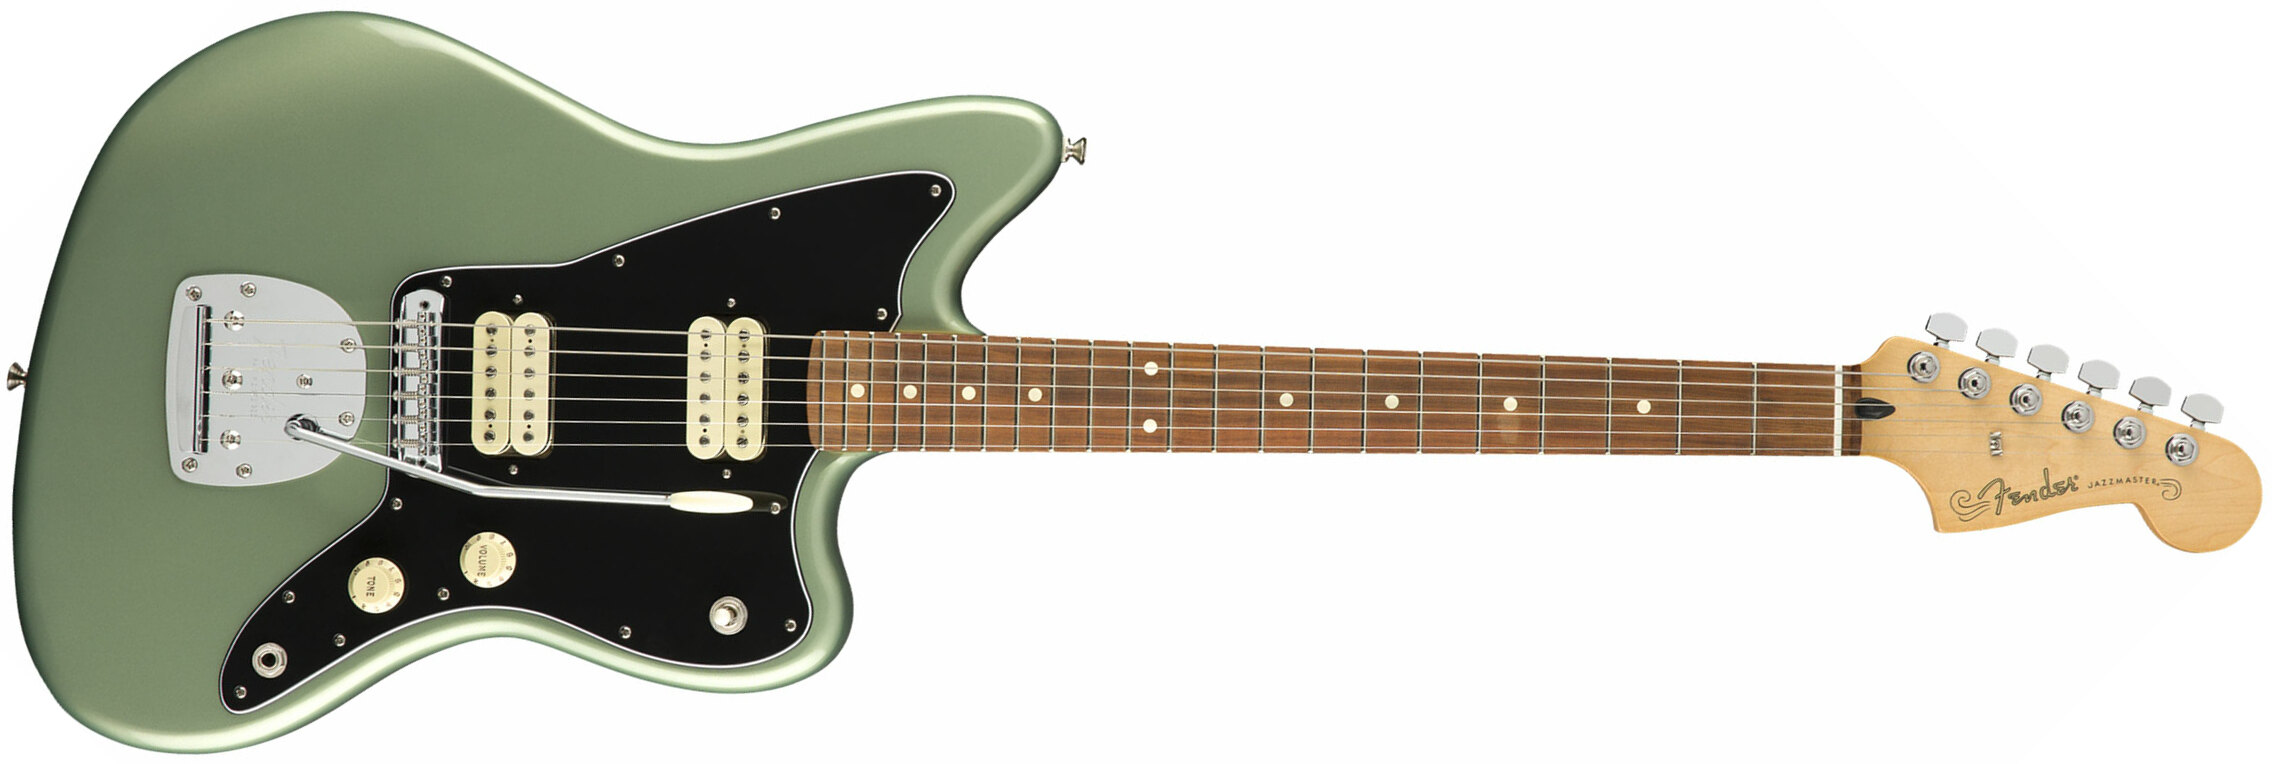 Fender Jazzmaster Player Mex Hh Pf - Sage Green Metallic - Guitarra electrica retro rock - Main picture